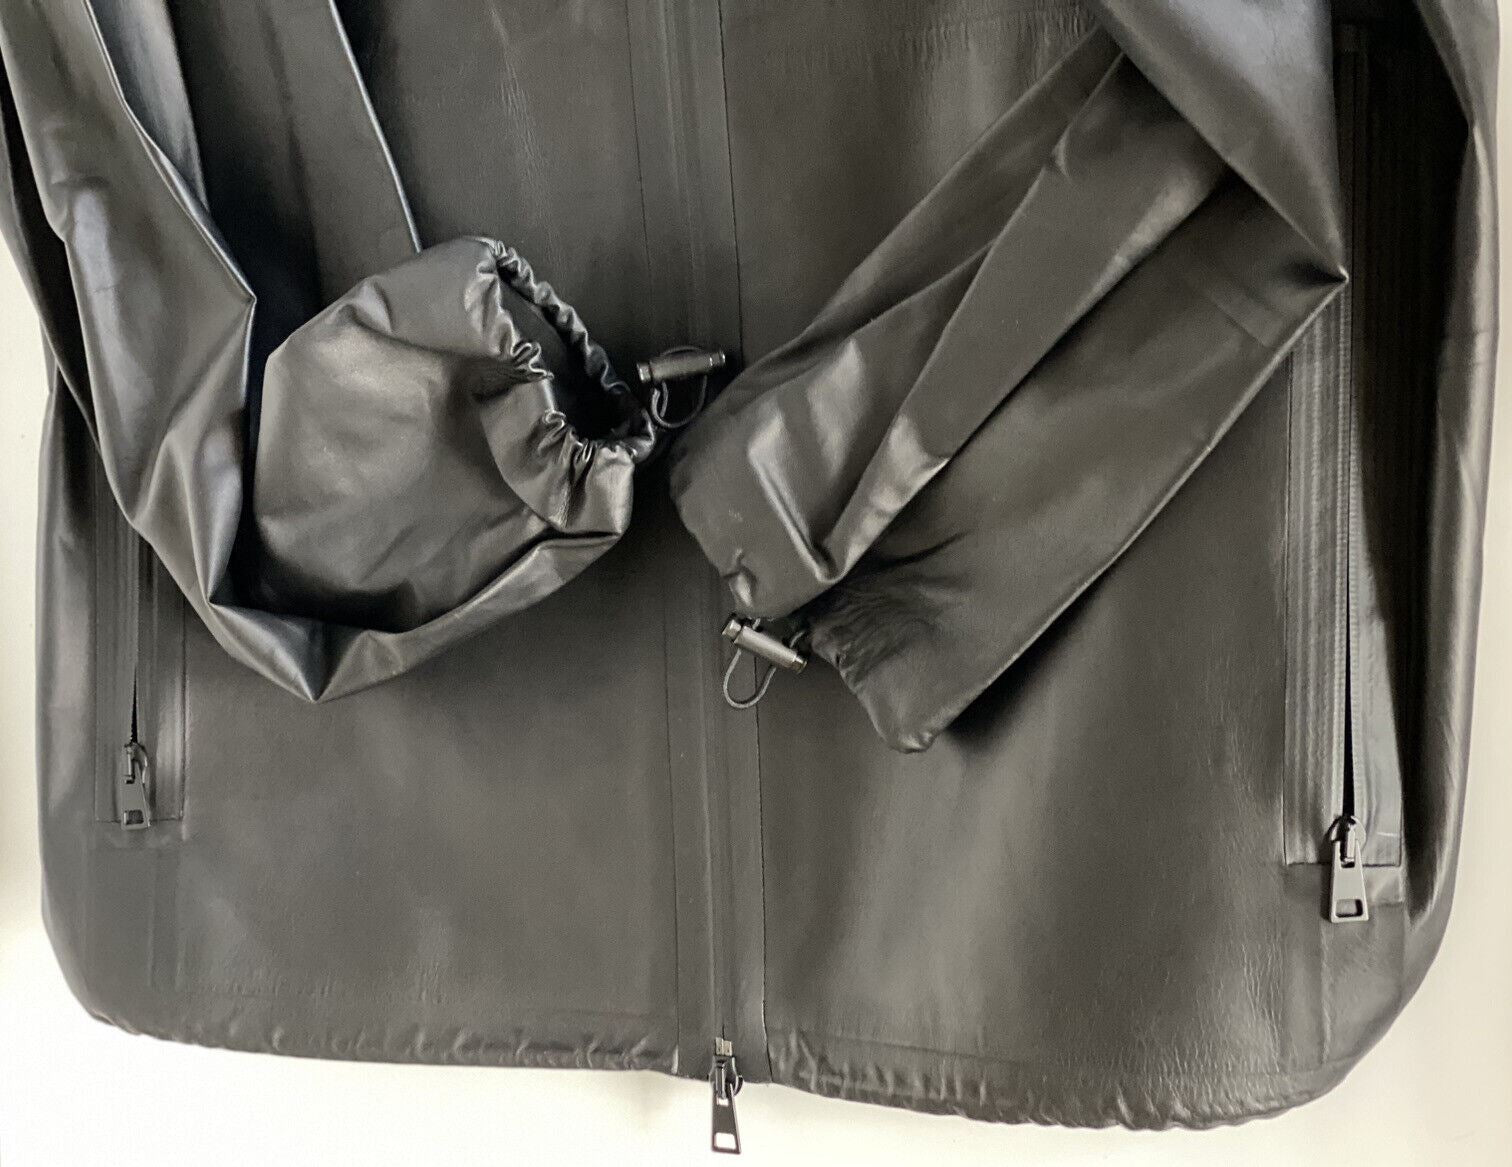 NWT $5900 Bottega Veneta Men's Calf Leather Light Jacket with Hoodie Black 42 US